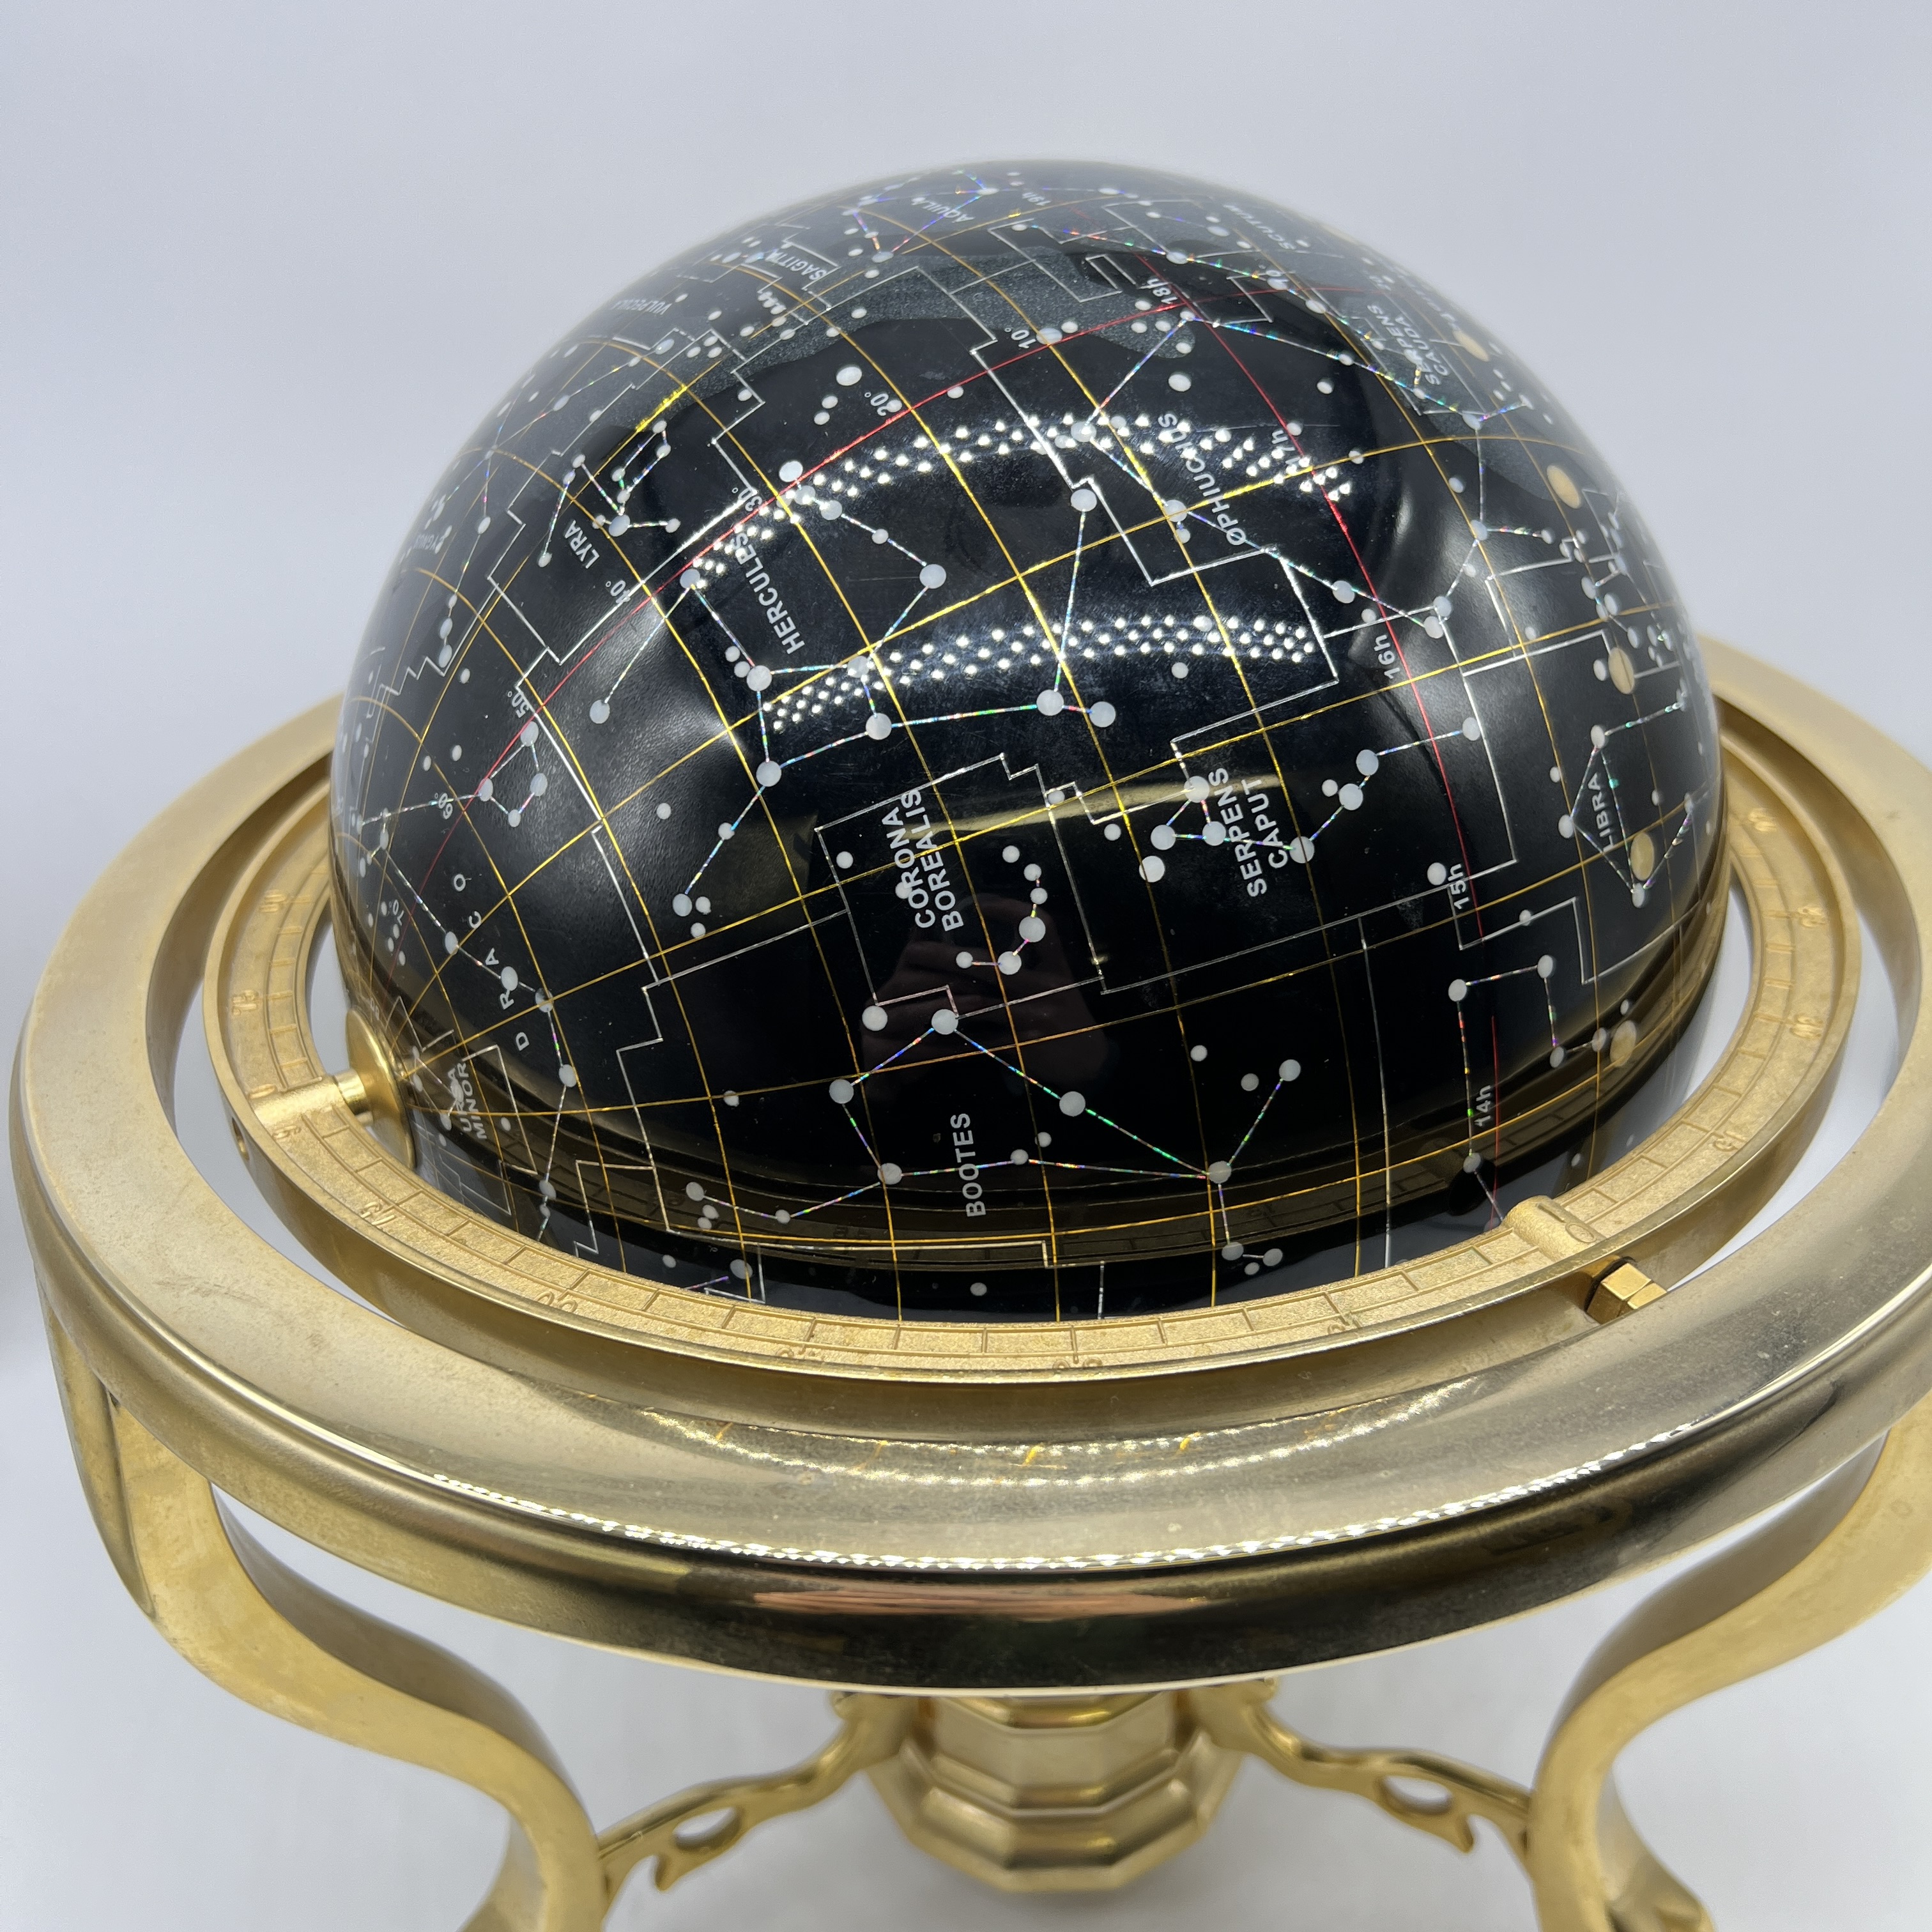 An ornamental globe of the constillation stars - Image 2 of 4